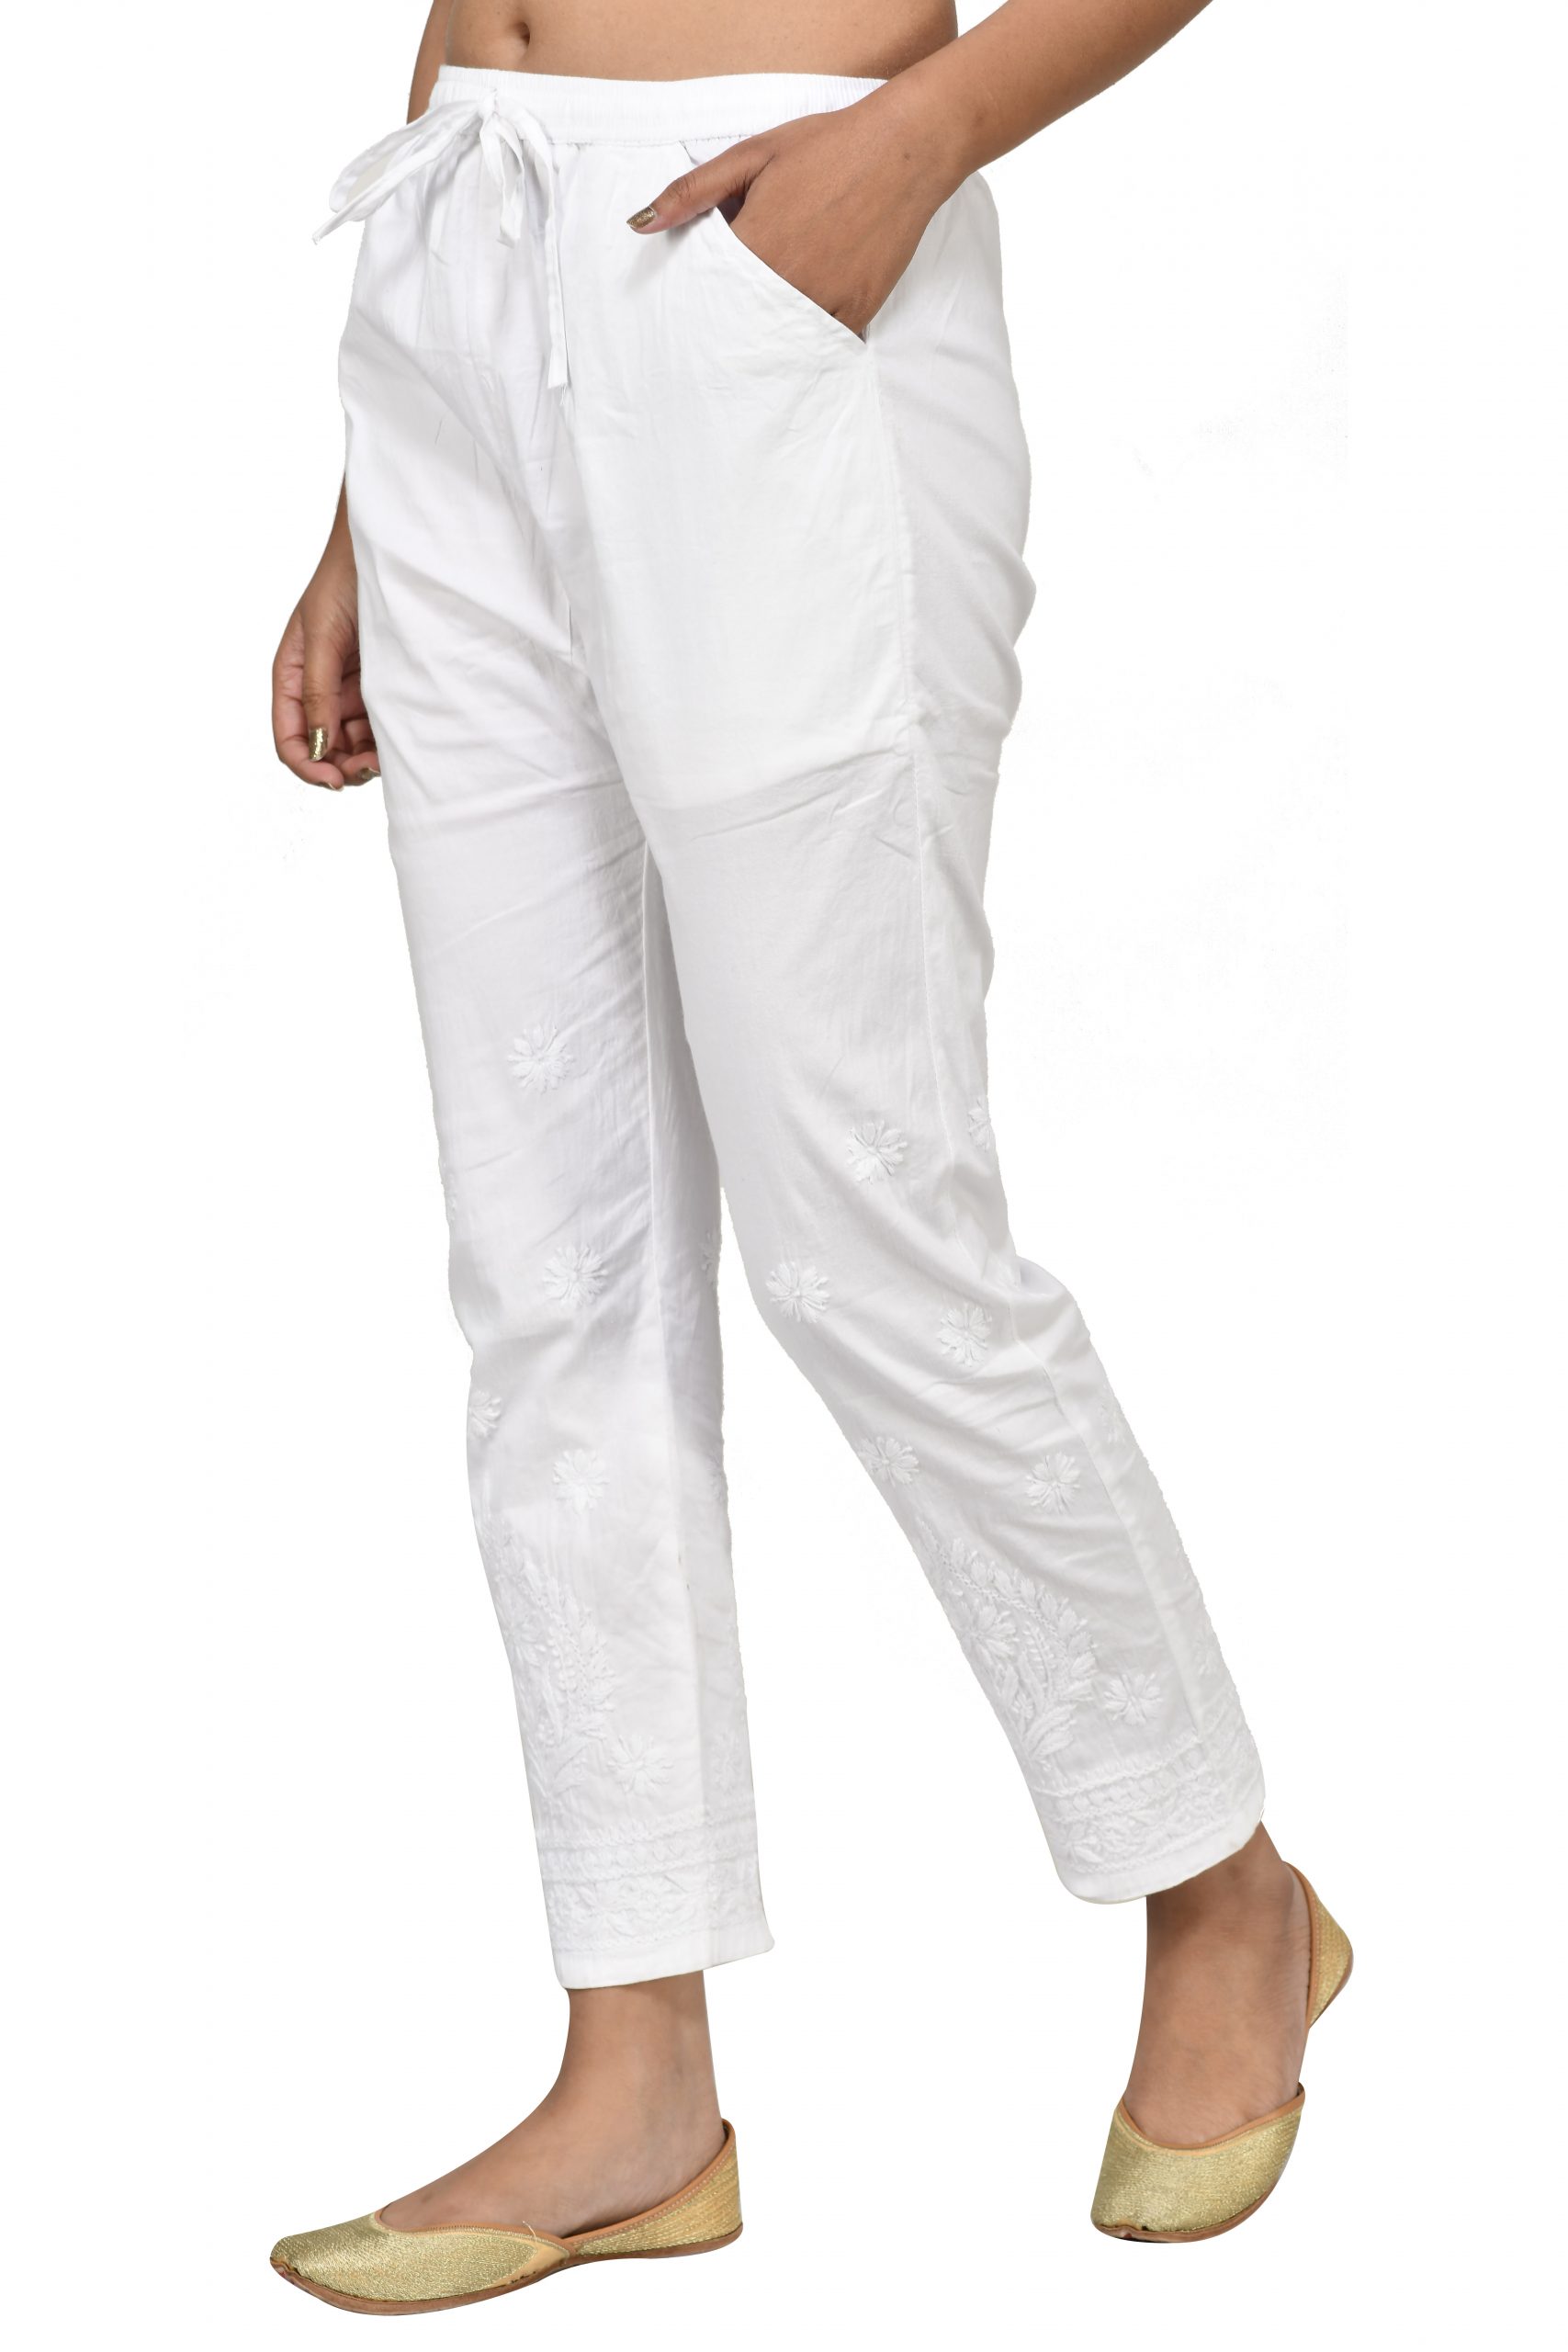 Men White Trousers - Buy Men White Trousers online in India